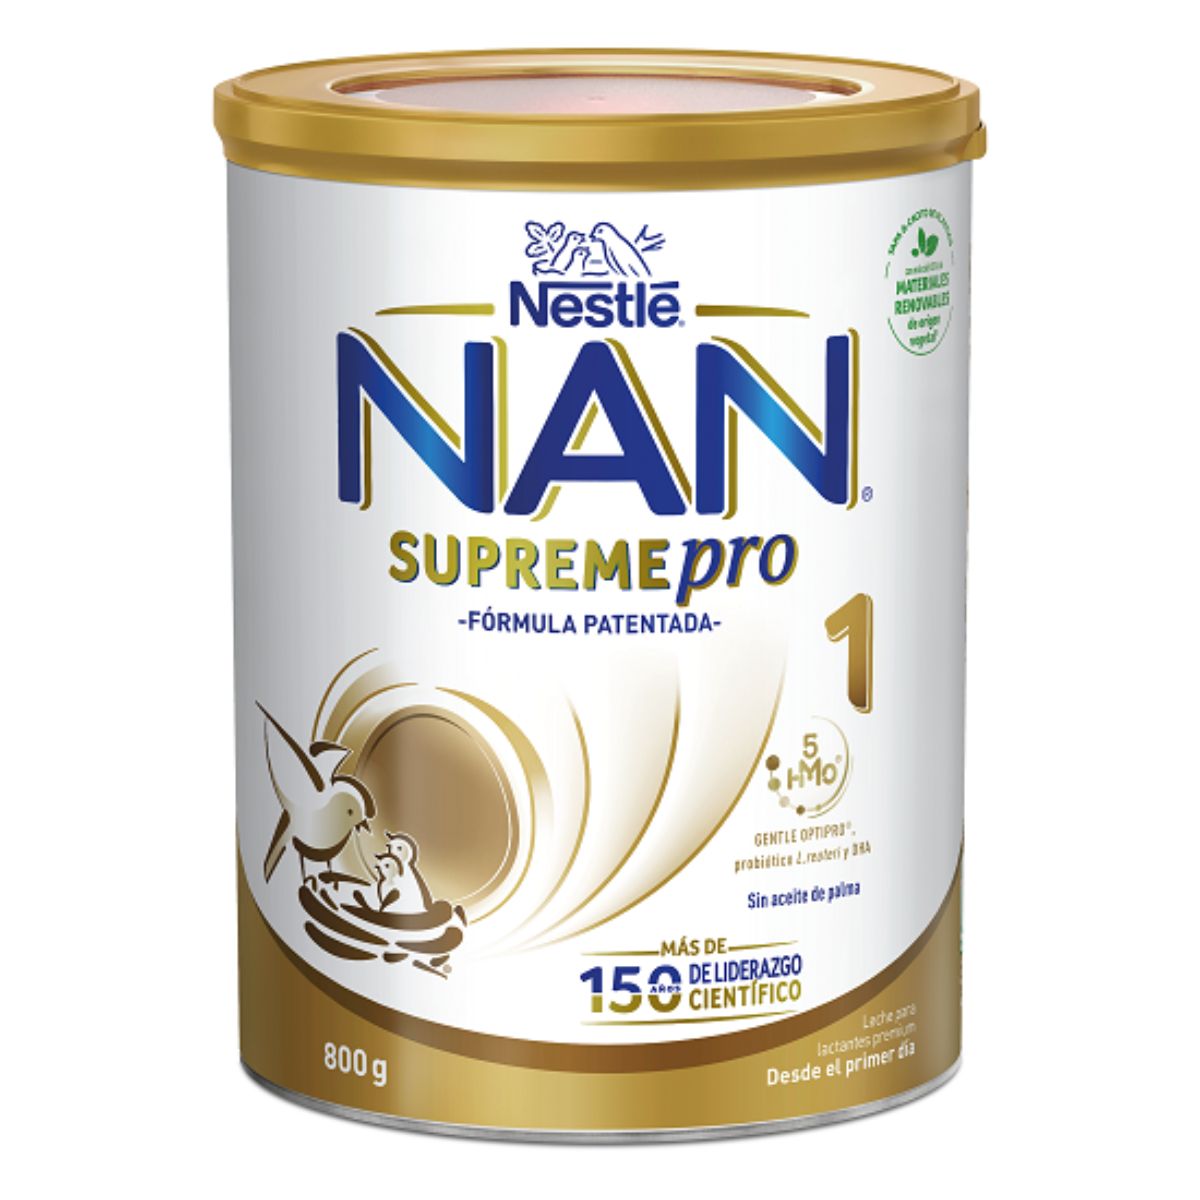 Formula de lapte praf, Nestle, Nan 1 Supreme Pro, 800 g Nestle